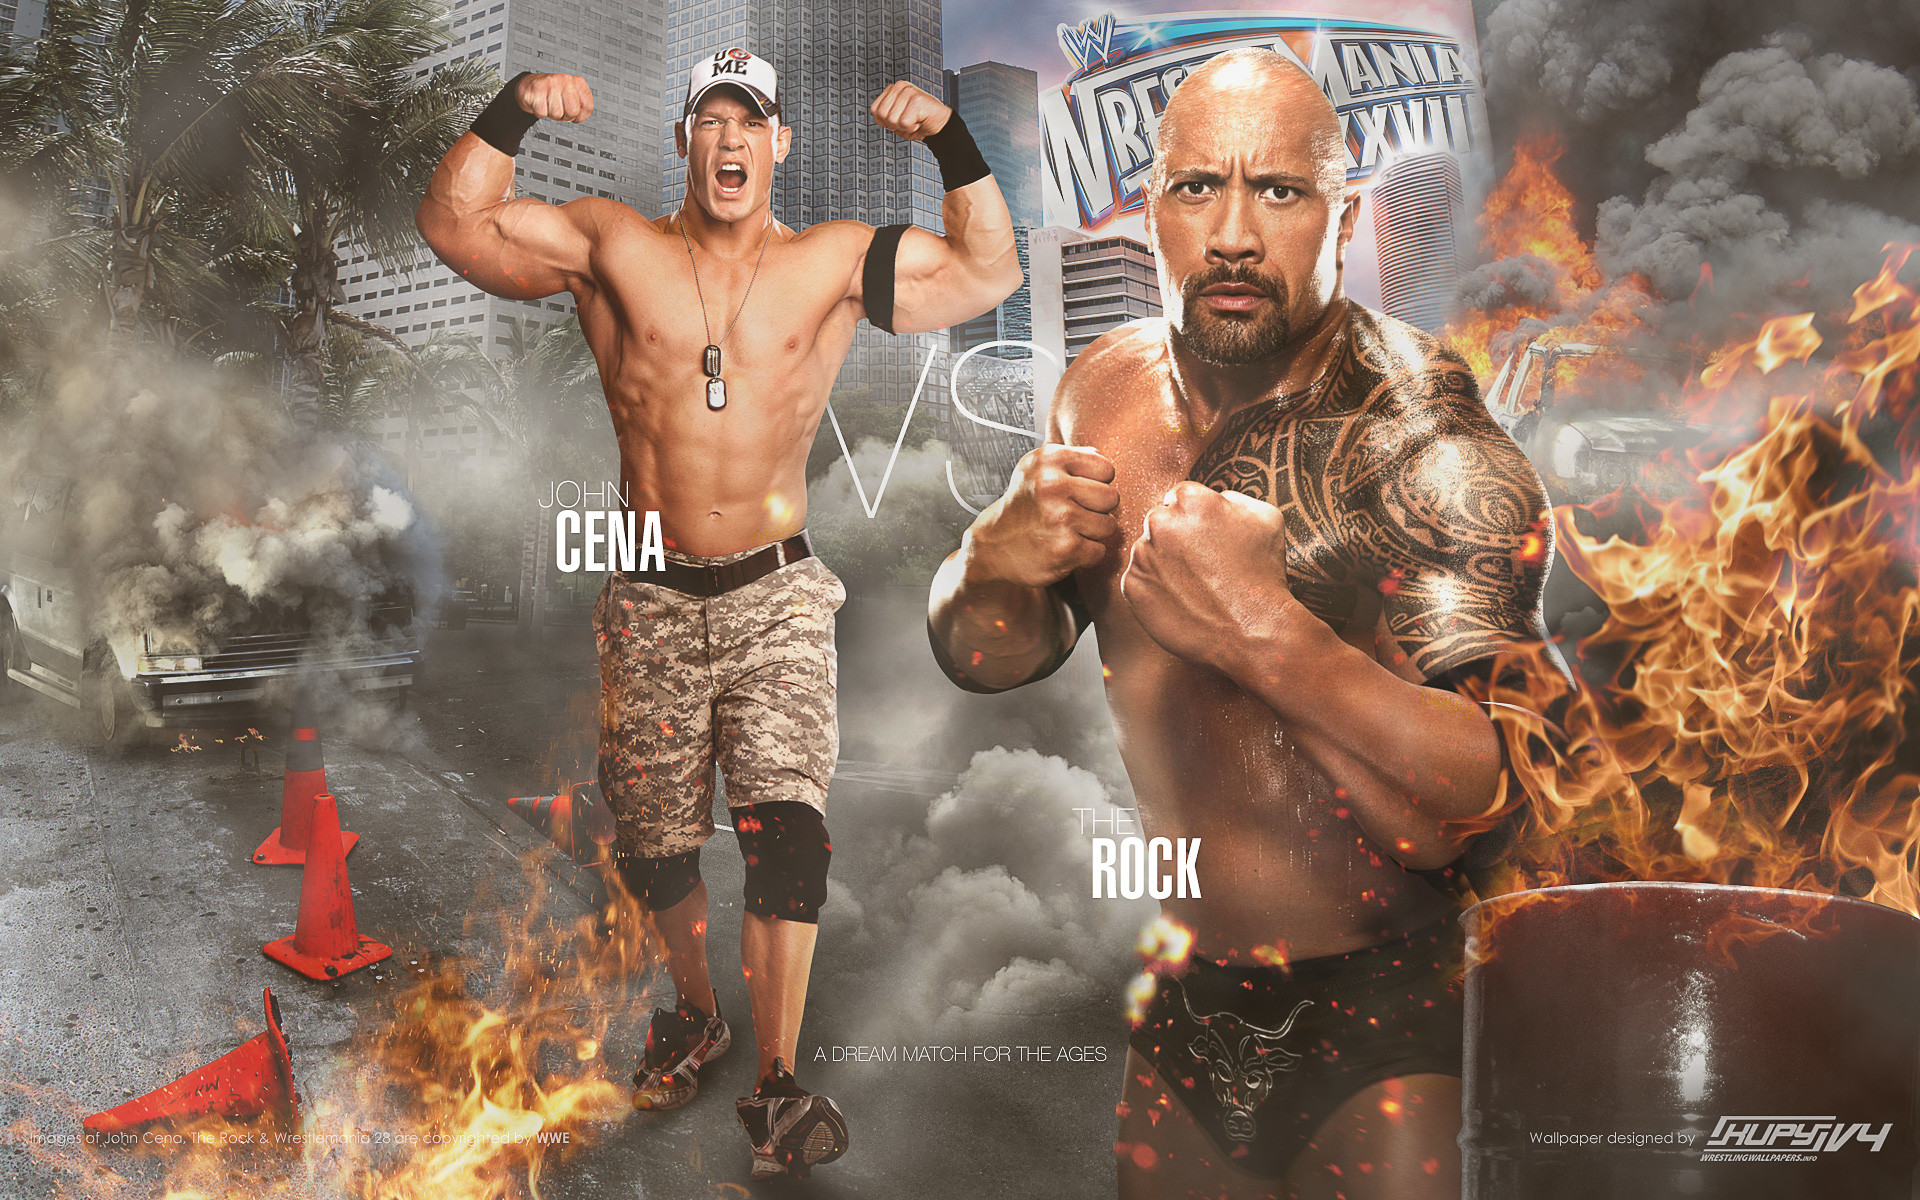 John Cena Wrestlemania 28 Wwe Wallpaper 1920ã1200 - Wwe John Cena Rock - HD Wallpaper 